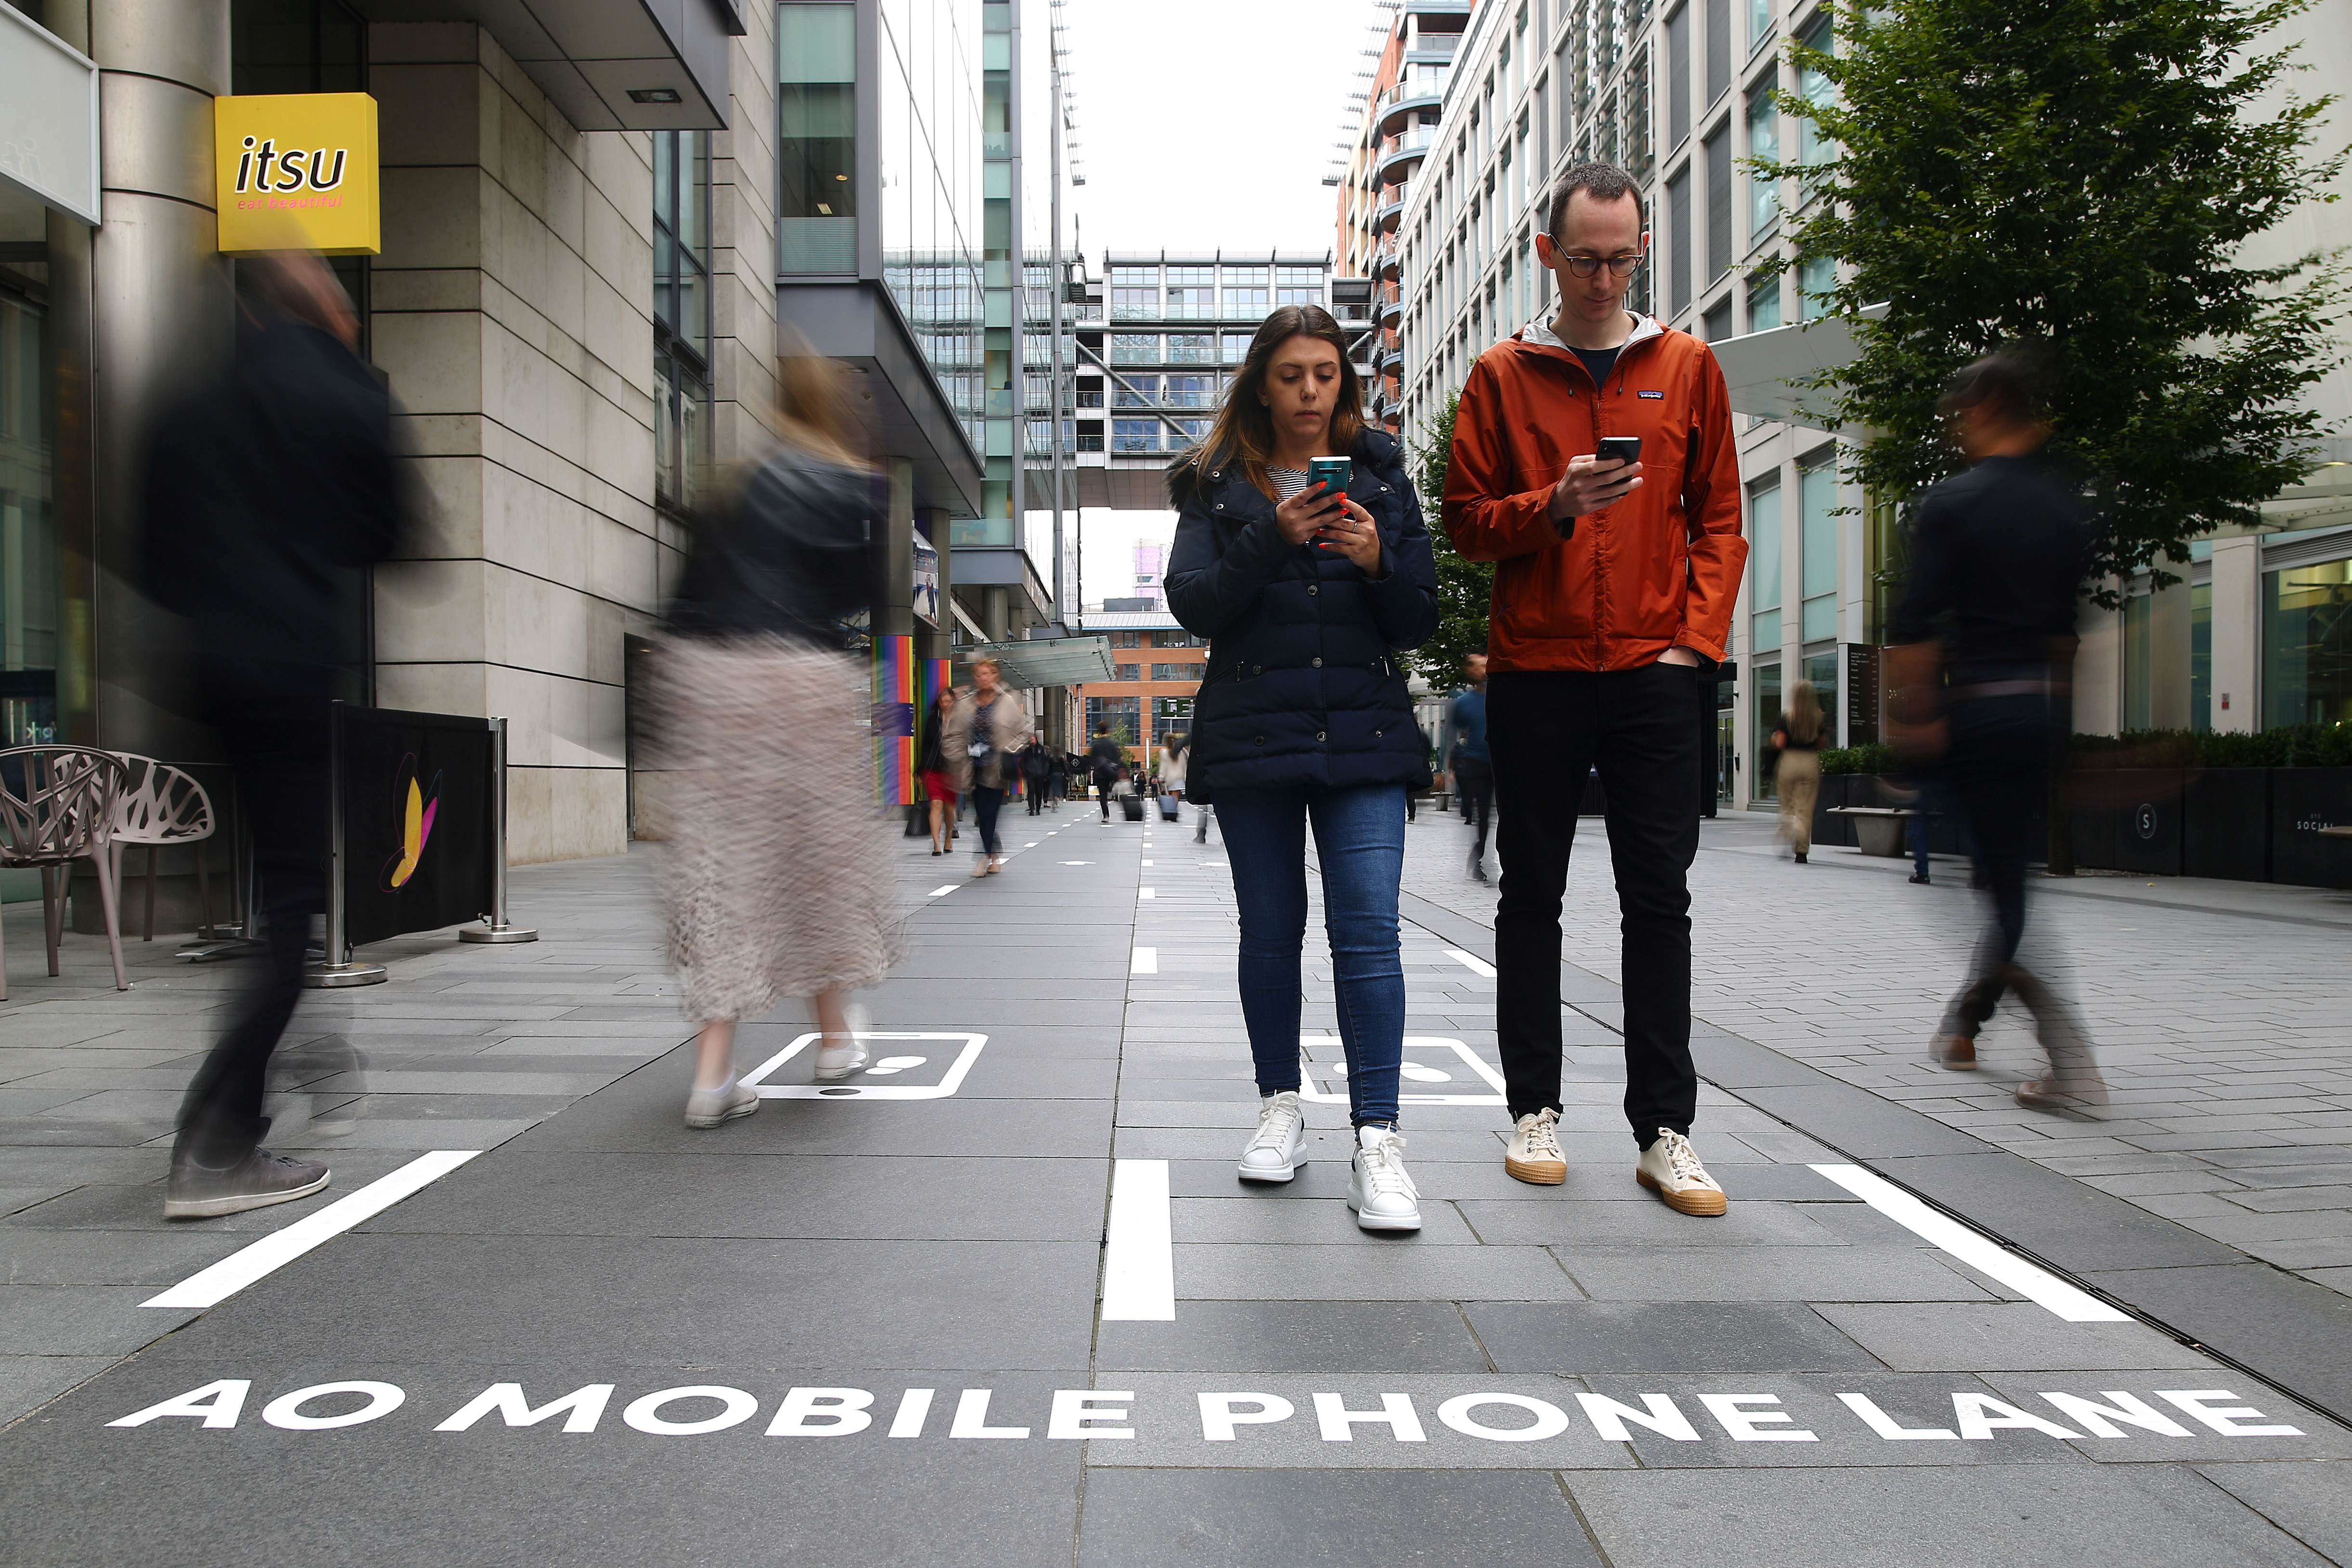 AO Mobile: Phone Lane